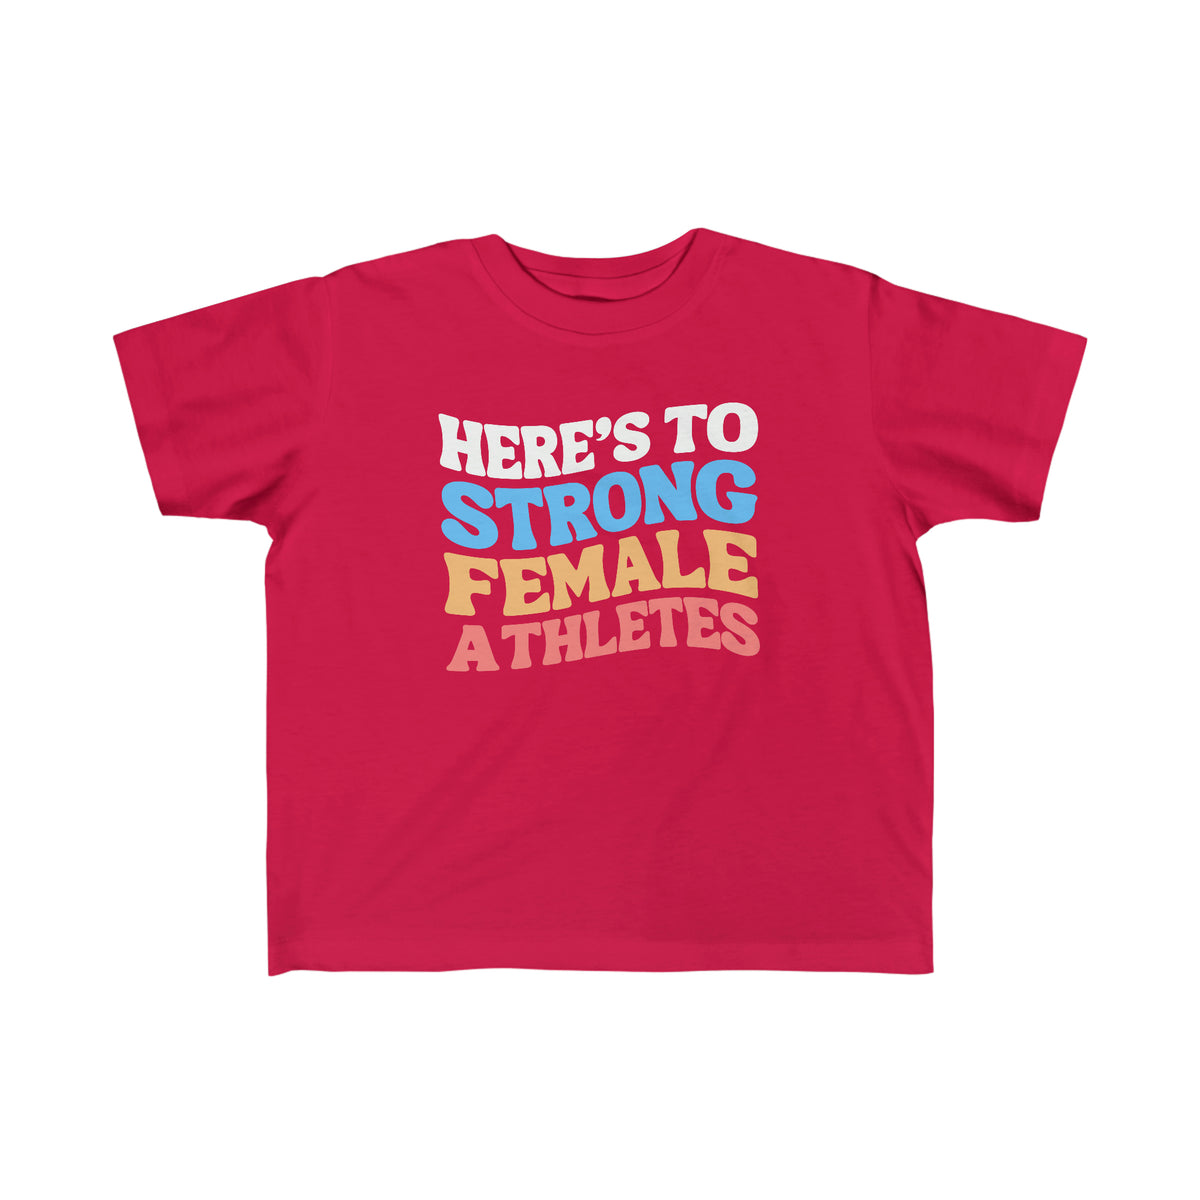 Strong Female Athletes Toddler T-Shirt